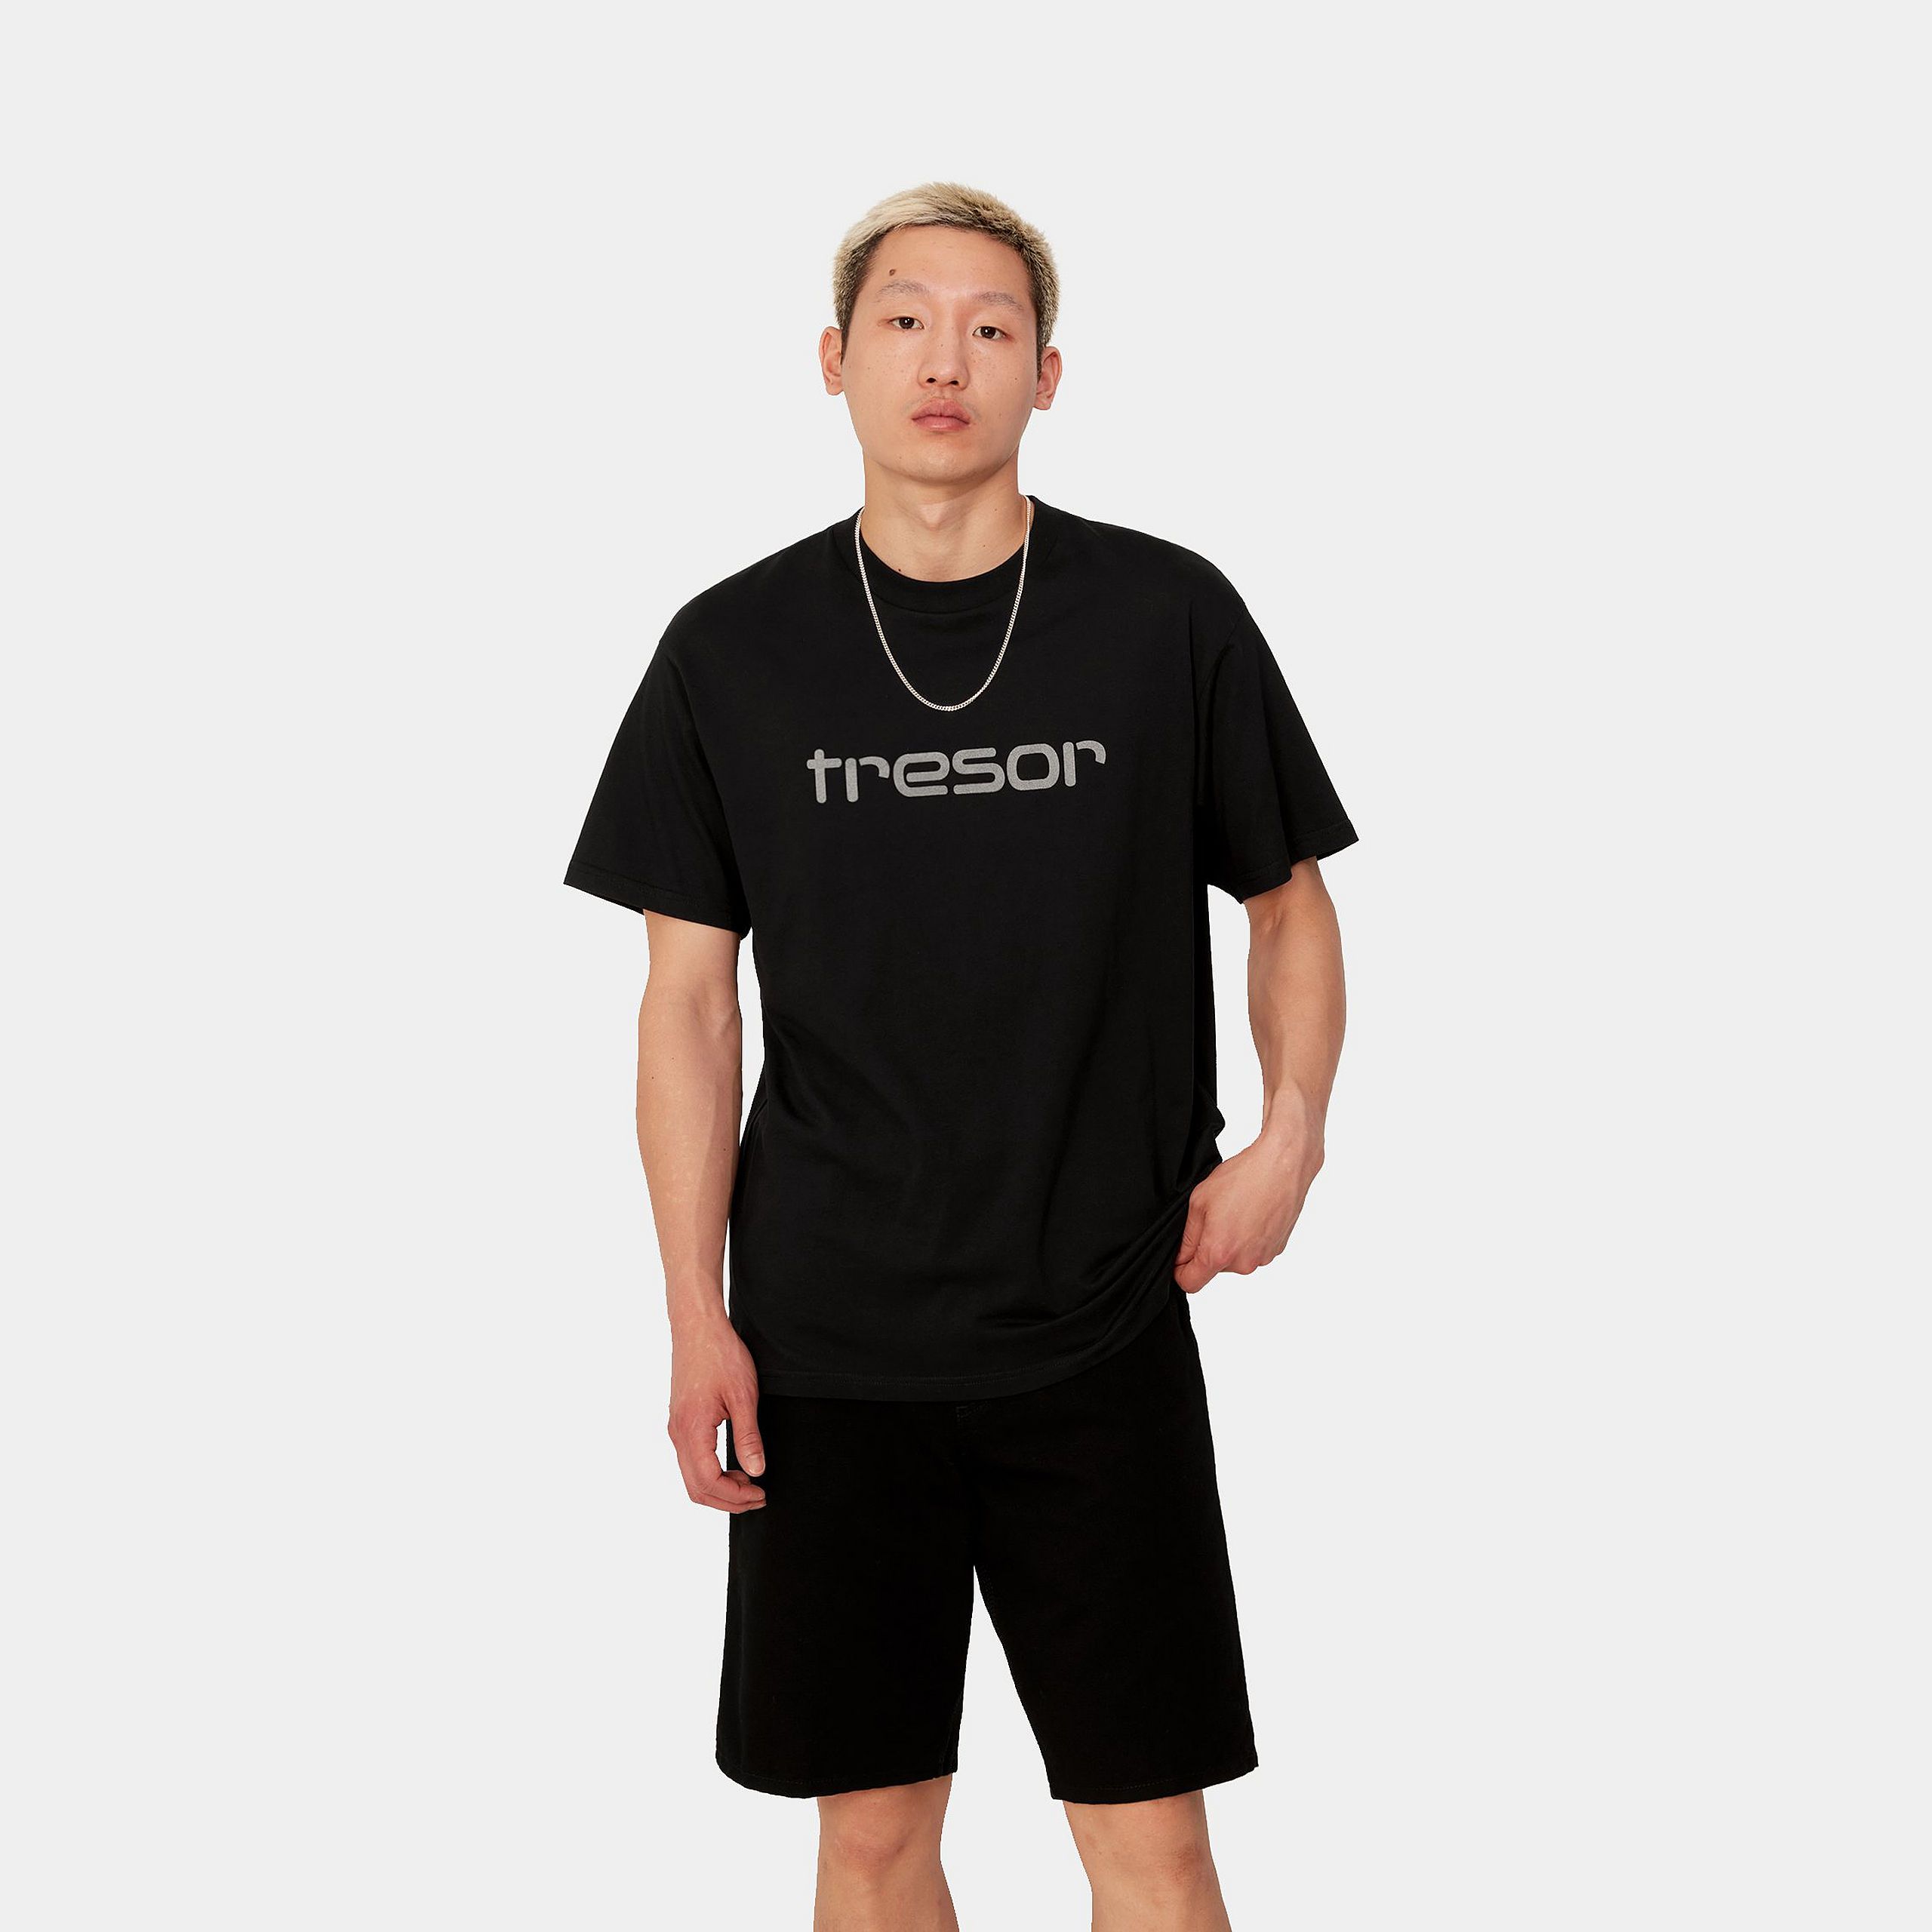 Carhartt WIP x TRESOR Techno Alliance S/S T-Shirt: Black - STAB Streetwear von Carhartt WIP im Streetwear Shop finden!